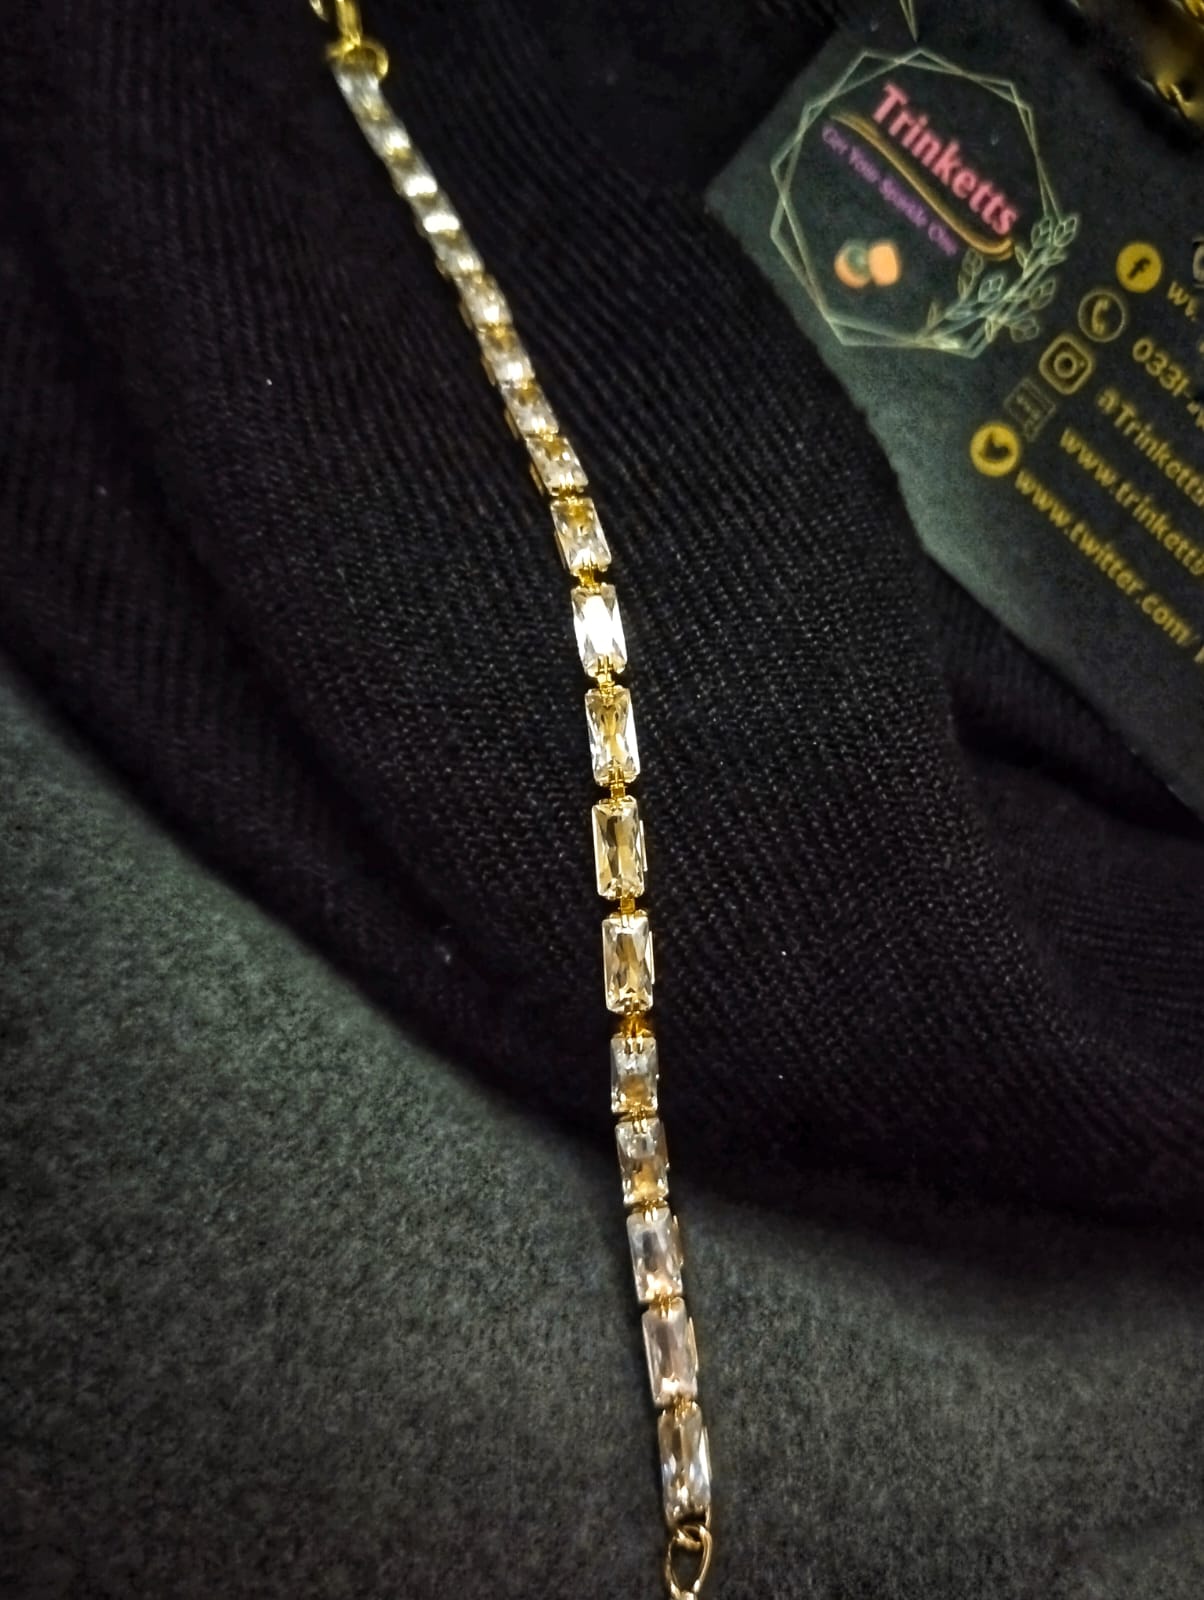 Close-up image of a stunning single-strand bracelet adorned with sparkling zircon stones in a brilliant transparent hue. The bracelet exudes timeless elegance and sophistication